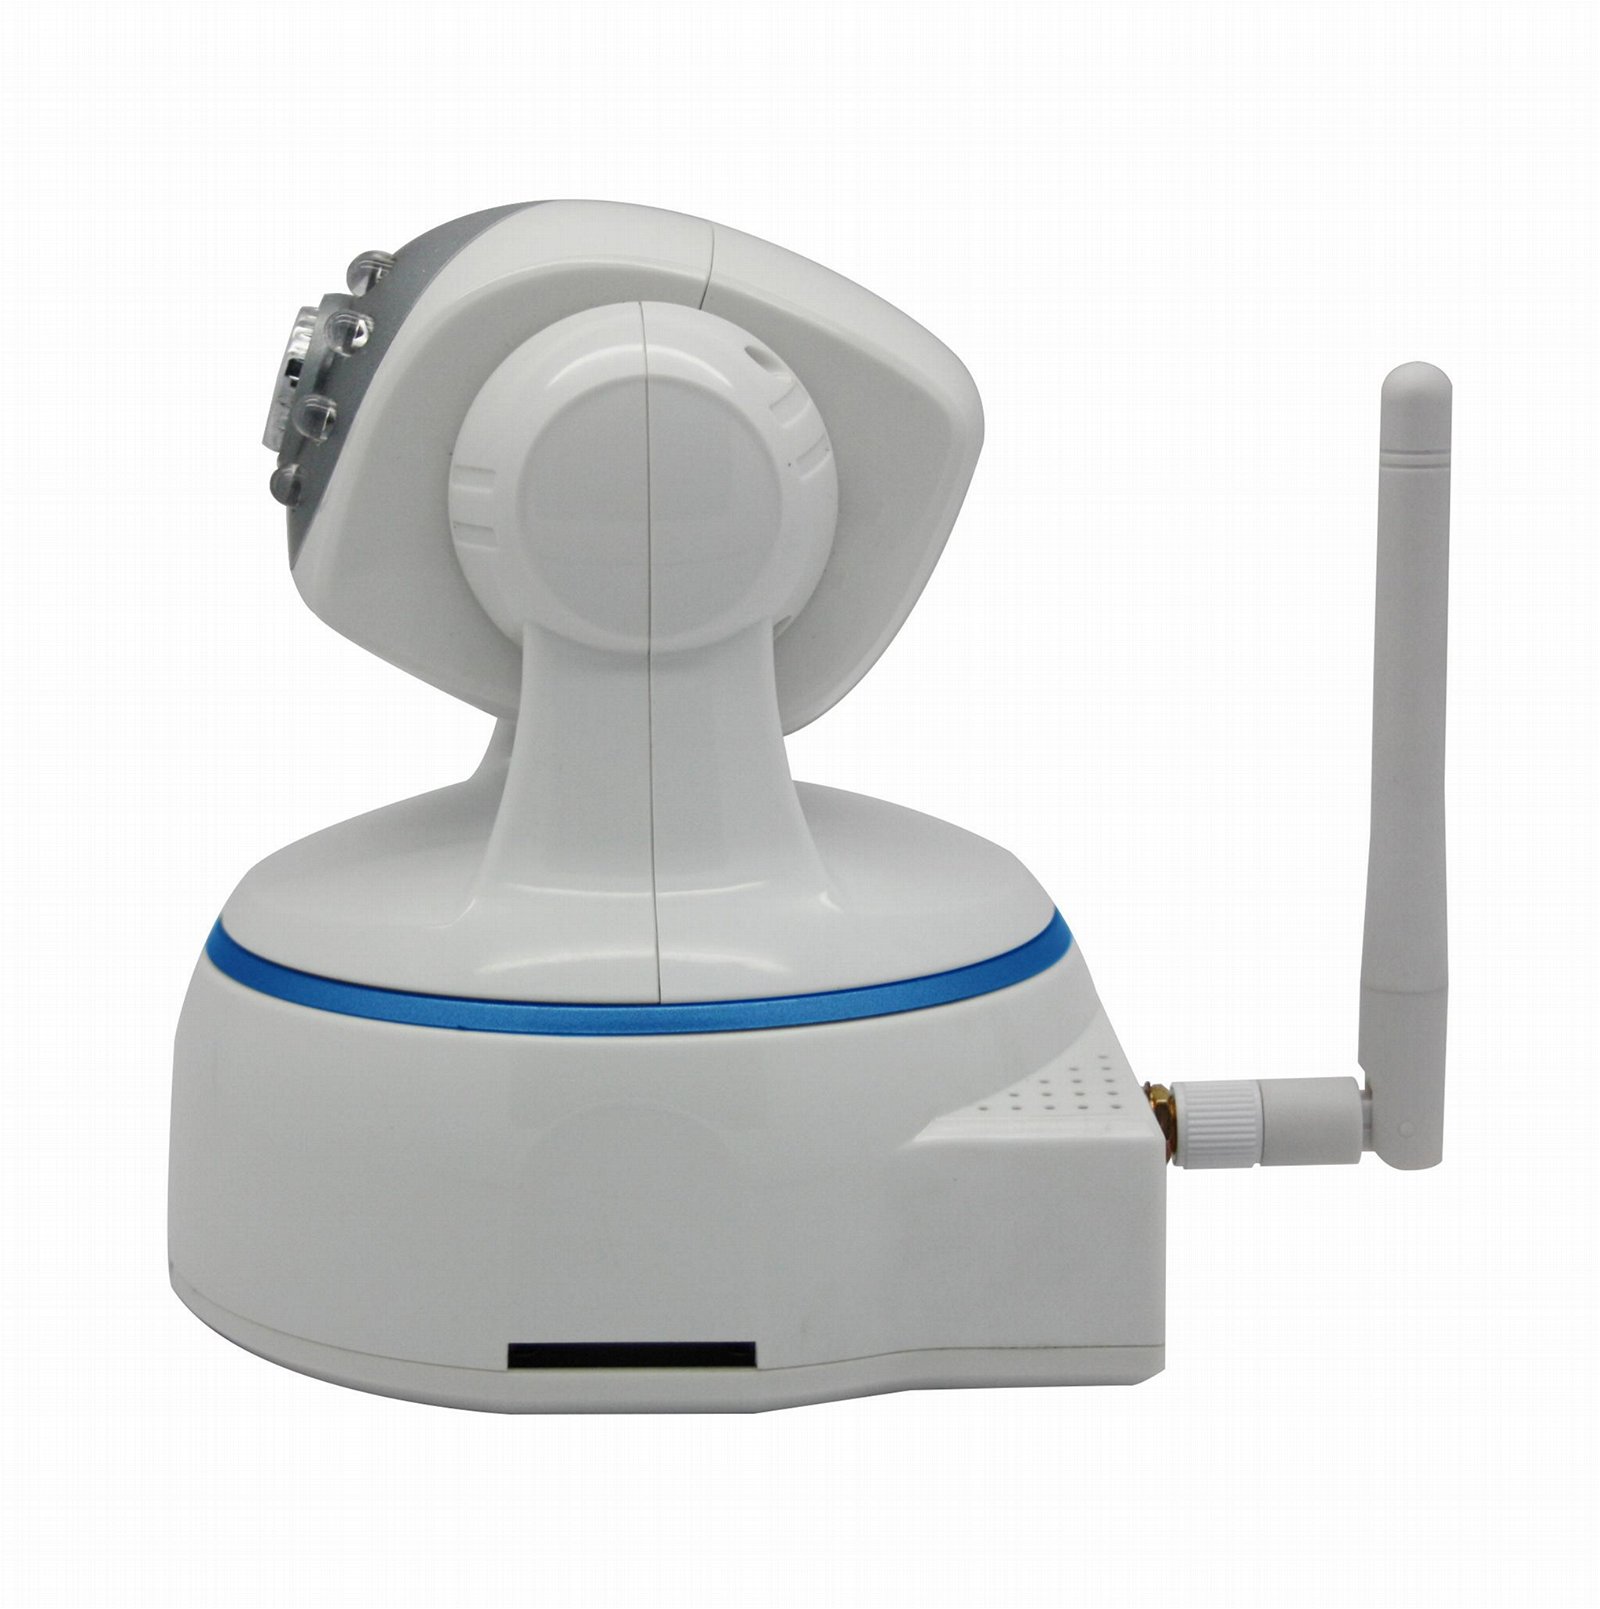  Wireless WiFi IP Camera, 2.0Megapixel Security Camera/Baby Monitor 